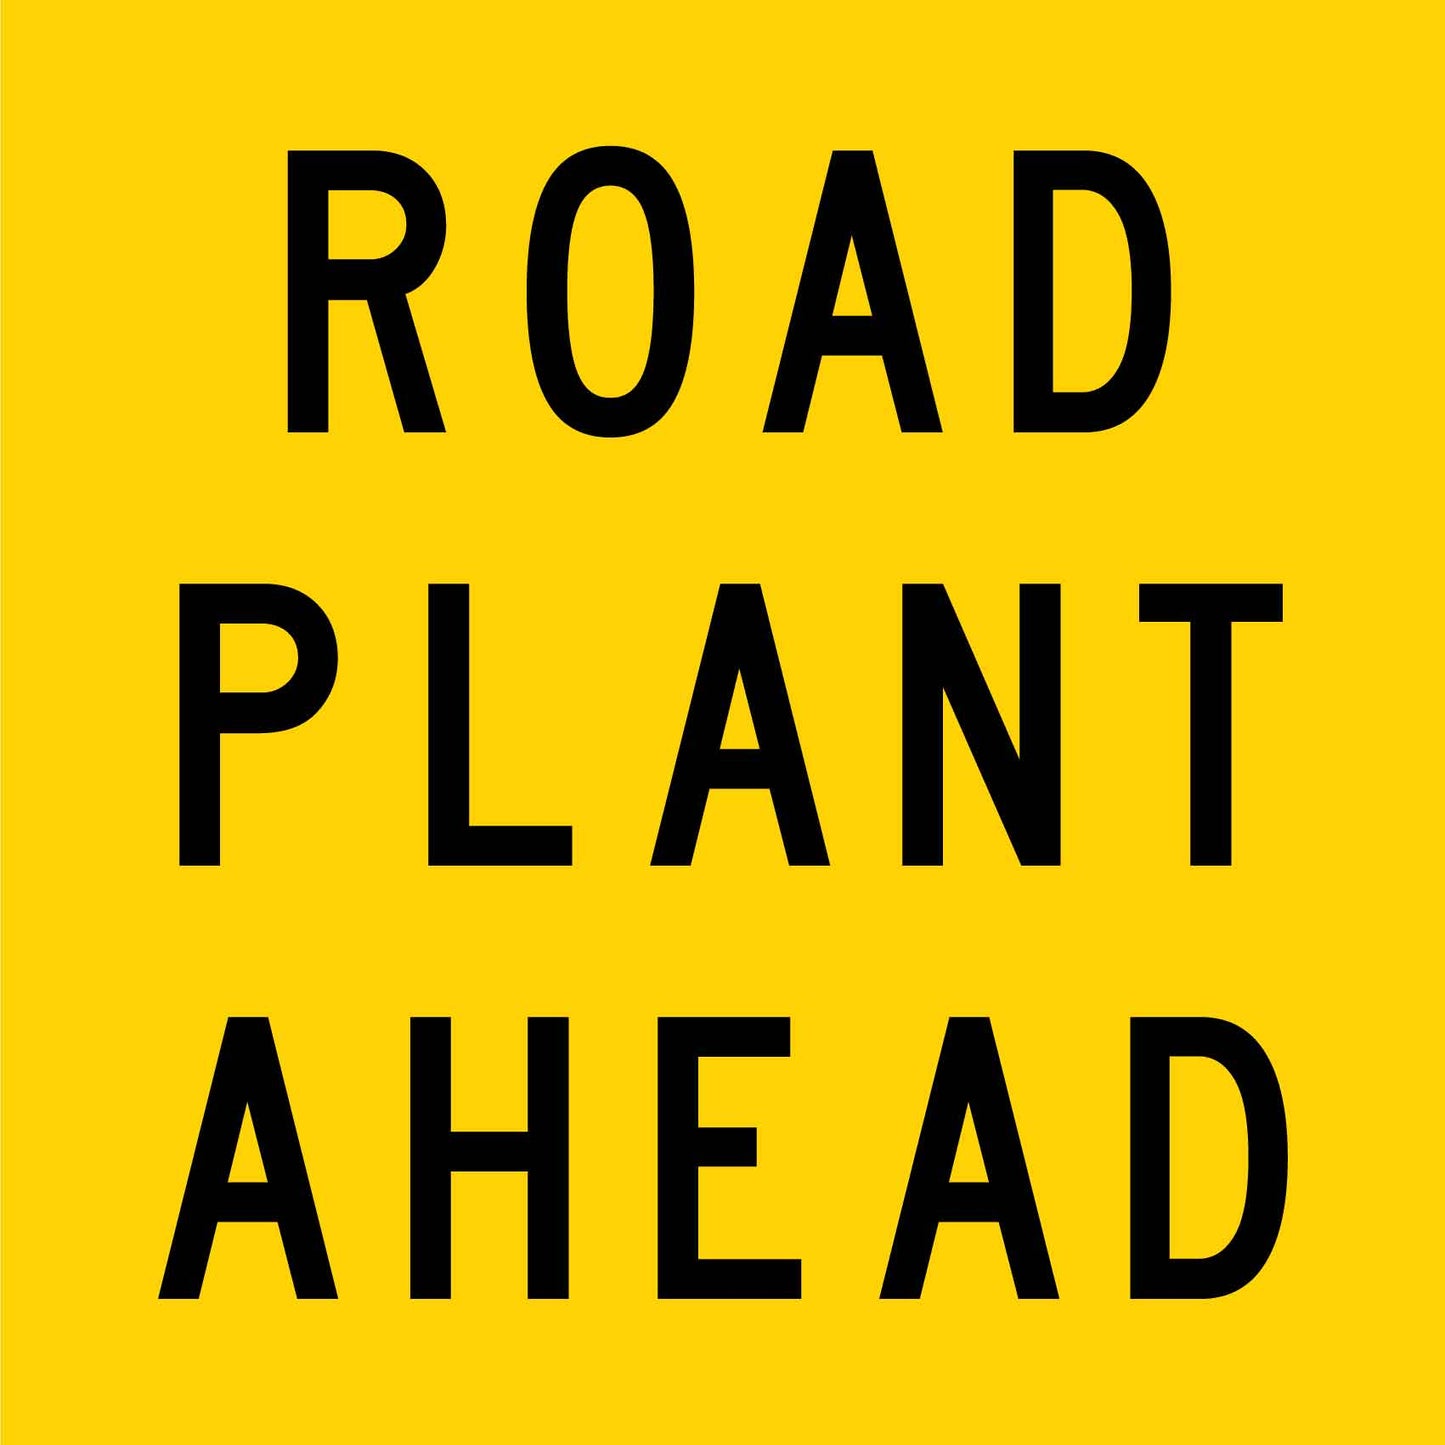 Road Plant Ahead Multi Message Traffic Sign